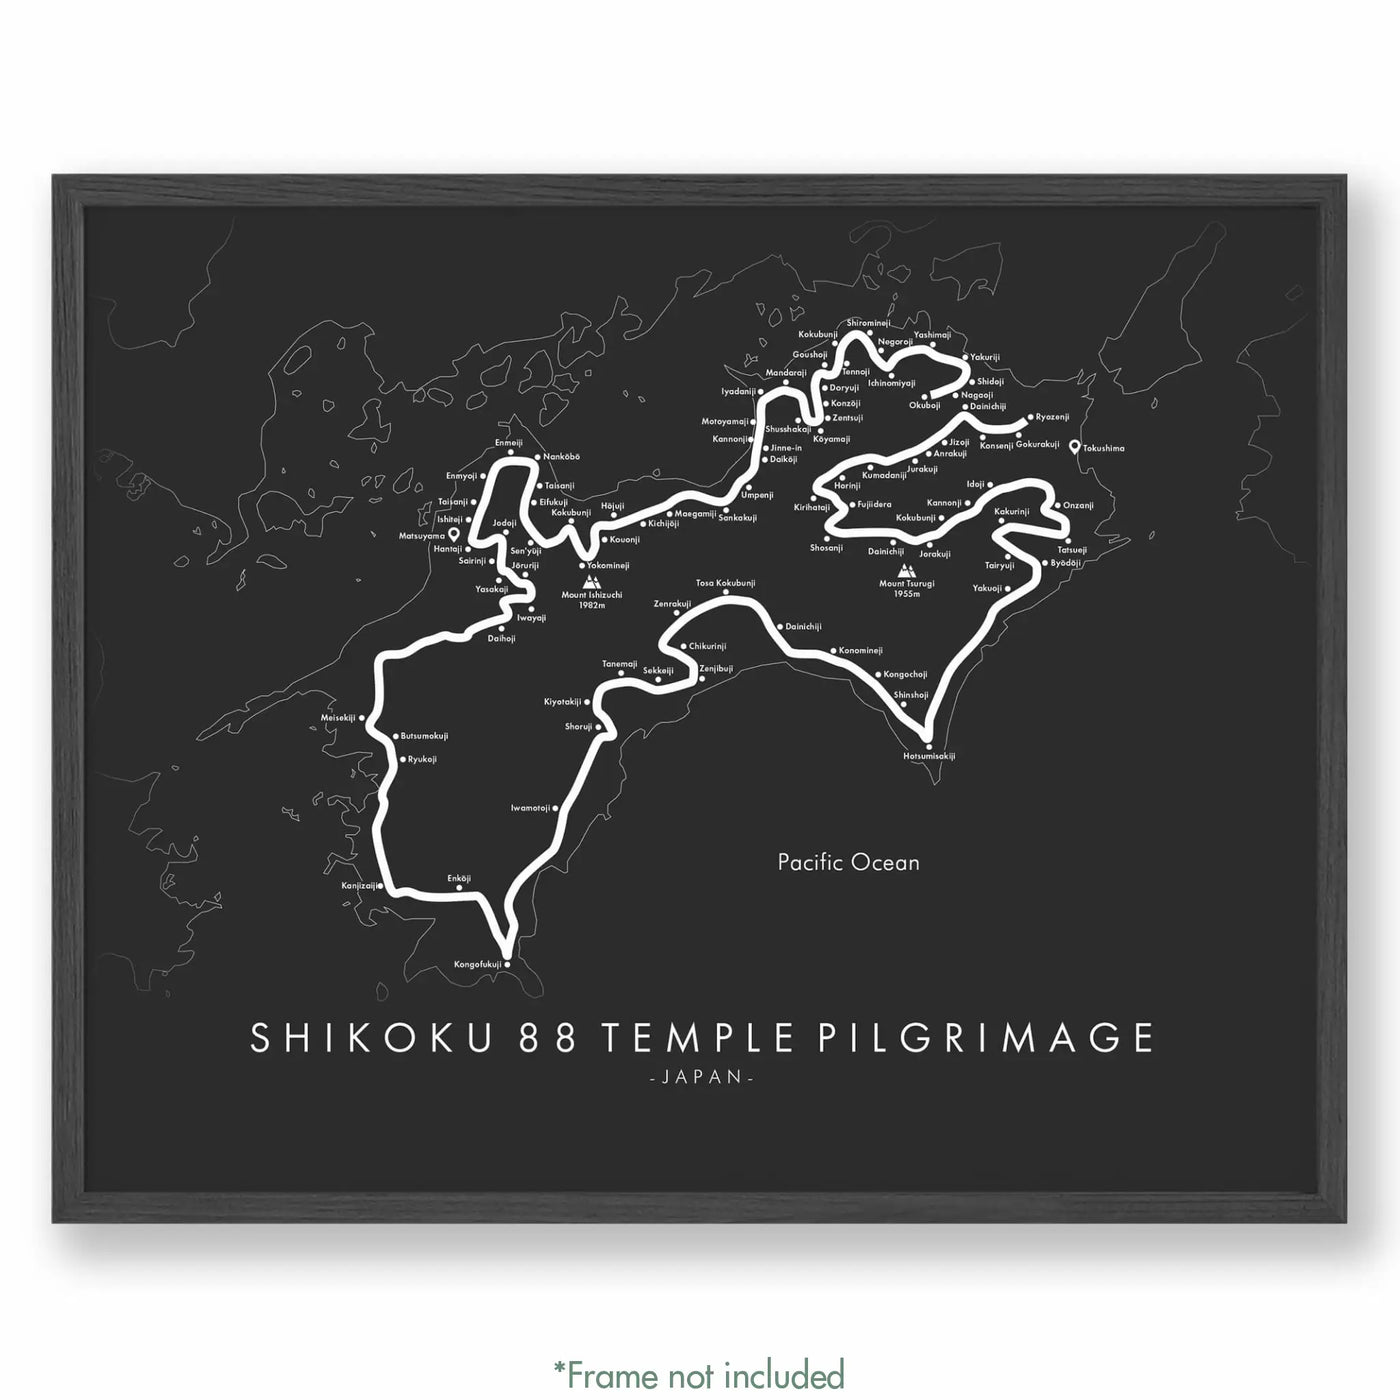 Trail Poster of Shikoku 88 Temple Pilgrimage - Grey